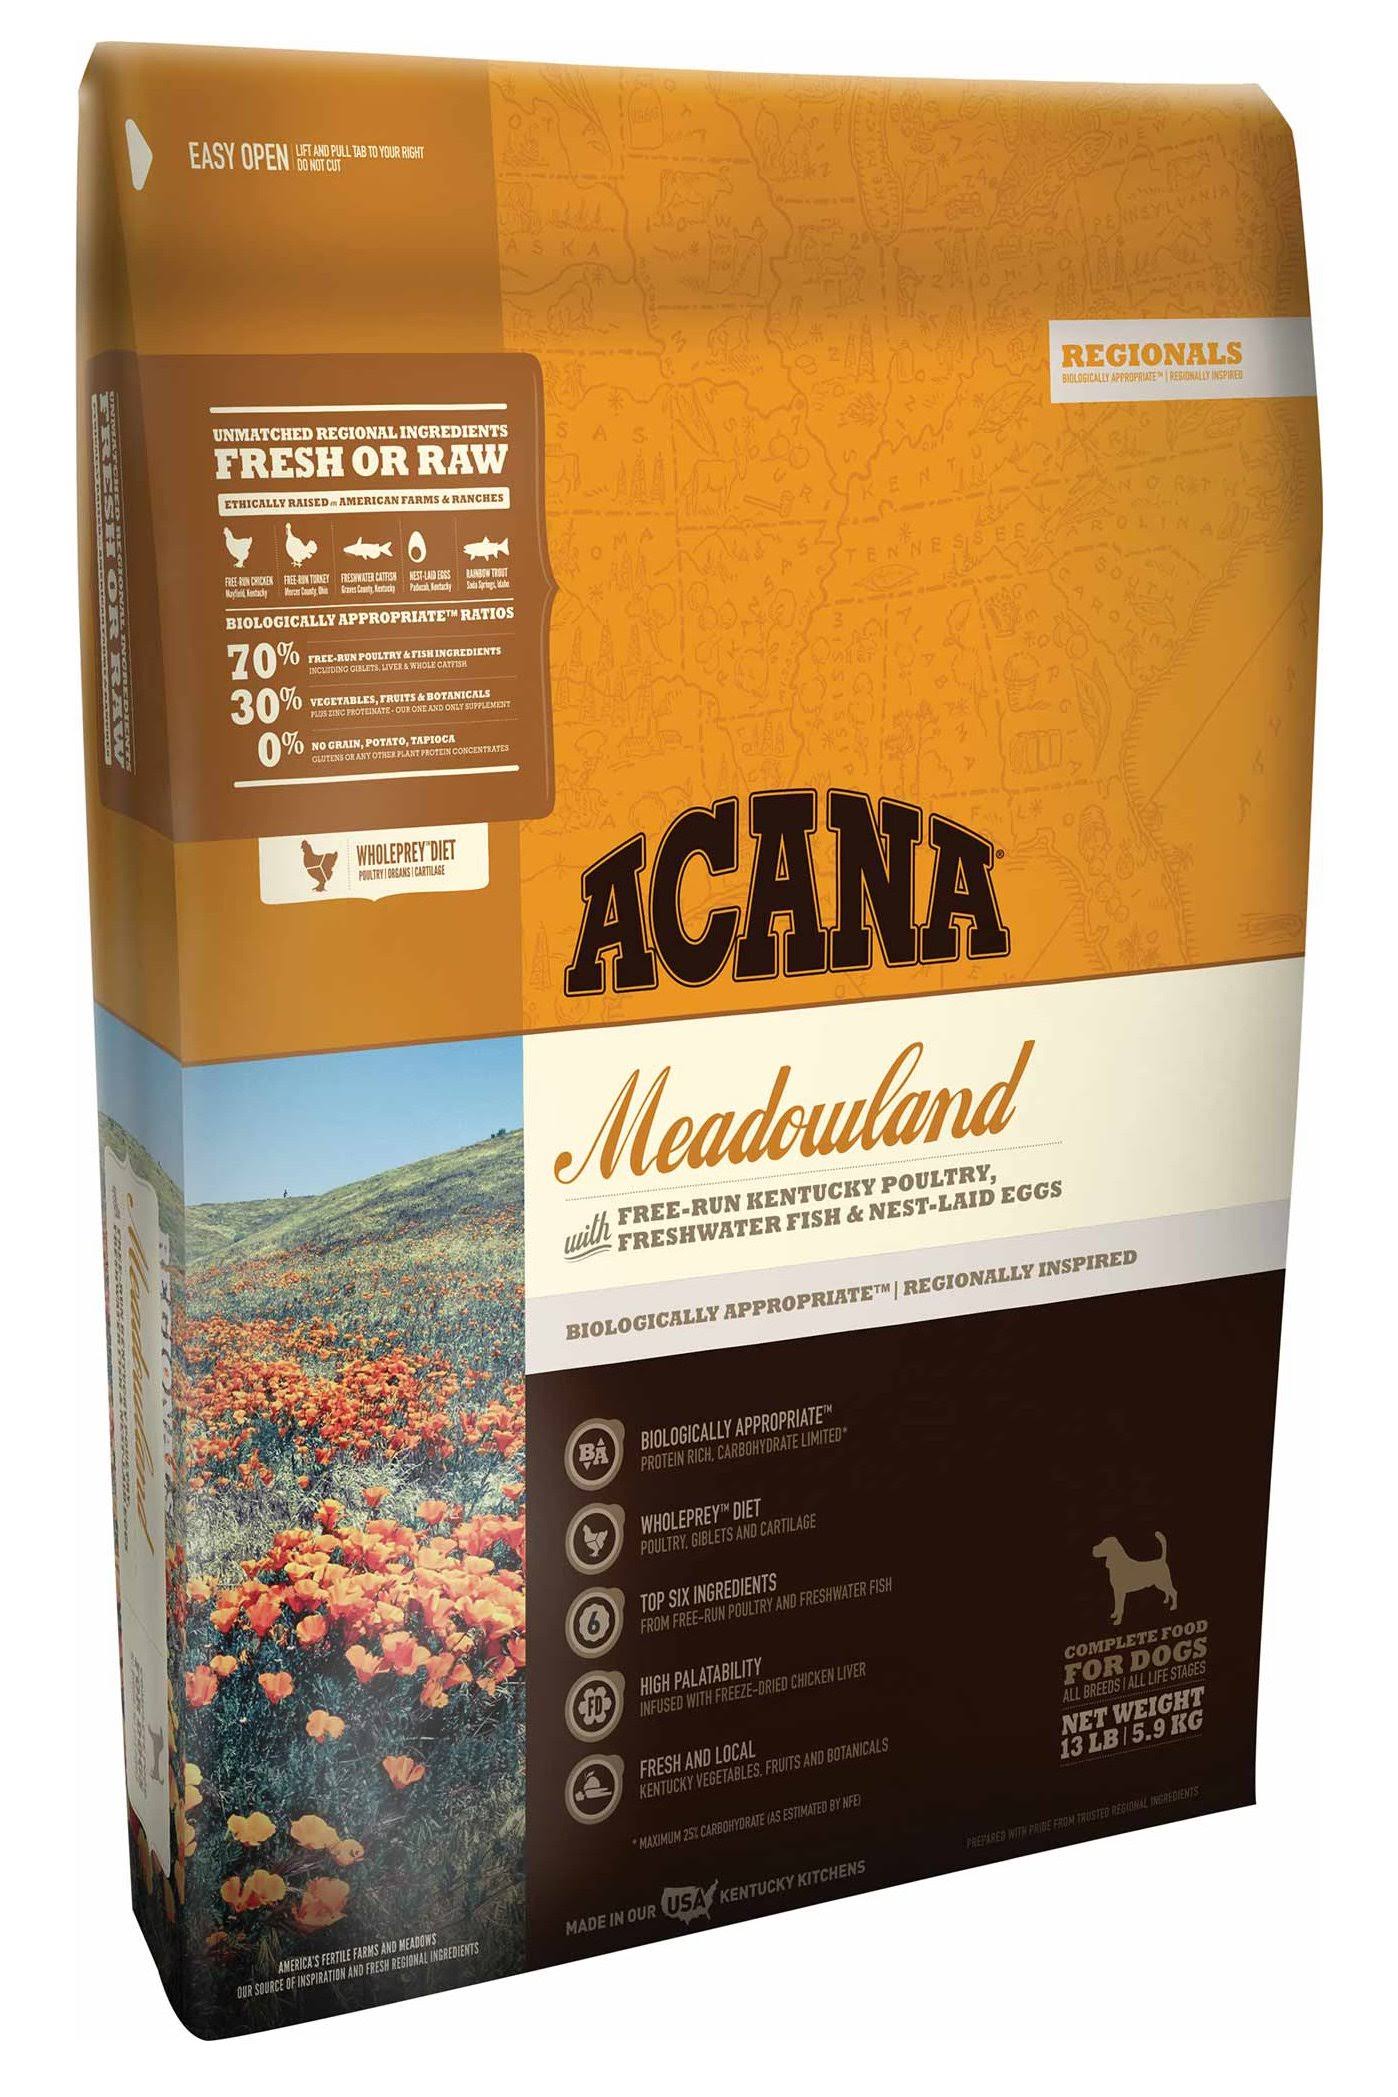 Acana Highest Protein, Meadowland, Grain Free Dry Dog Food, 45lb